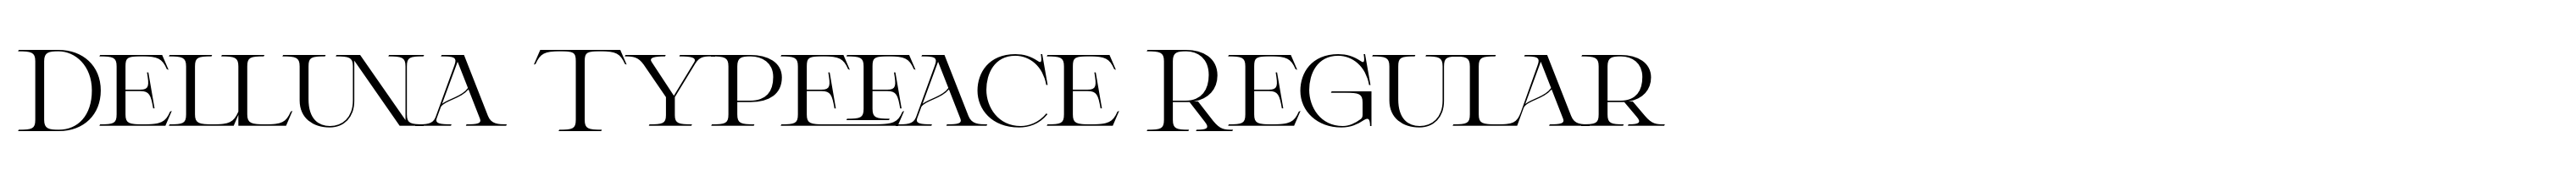 Delluna Typeface Regular